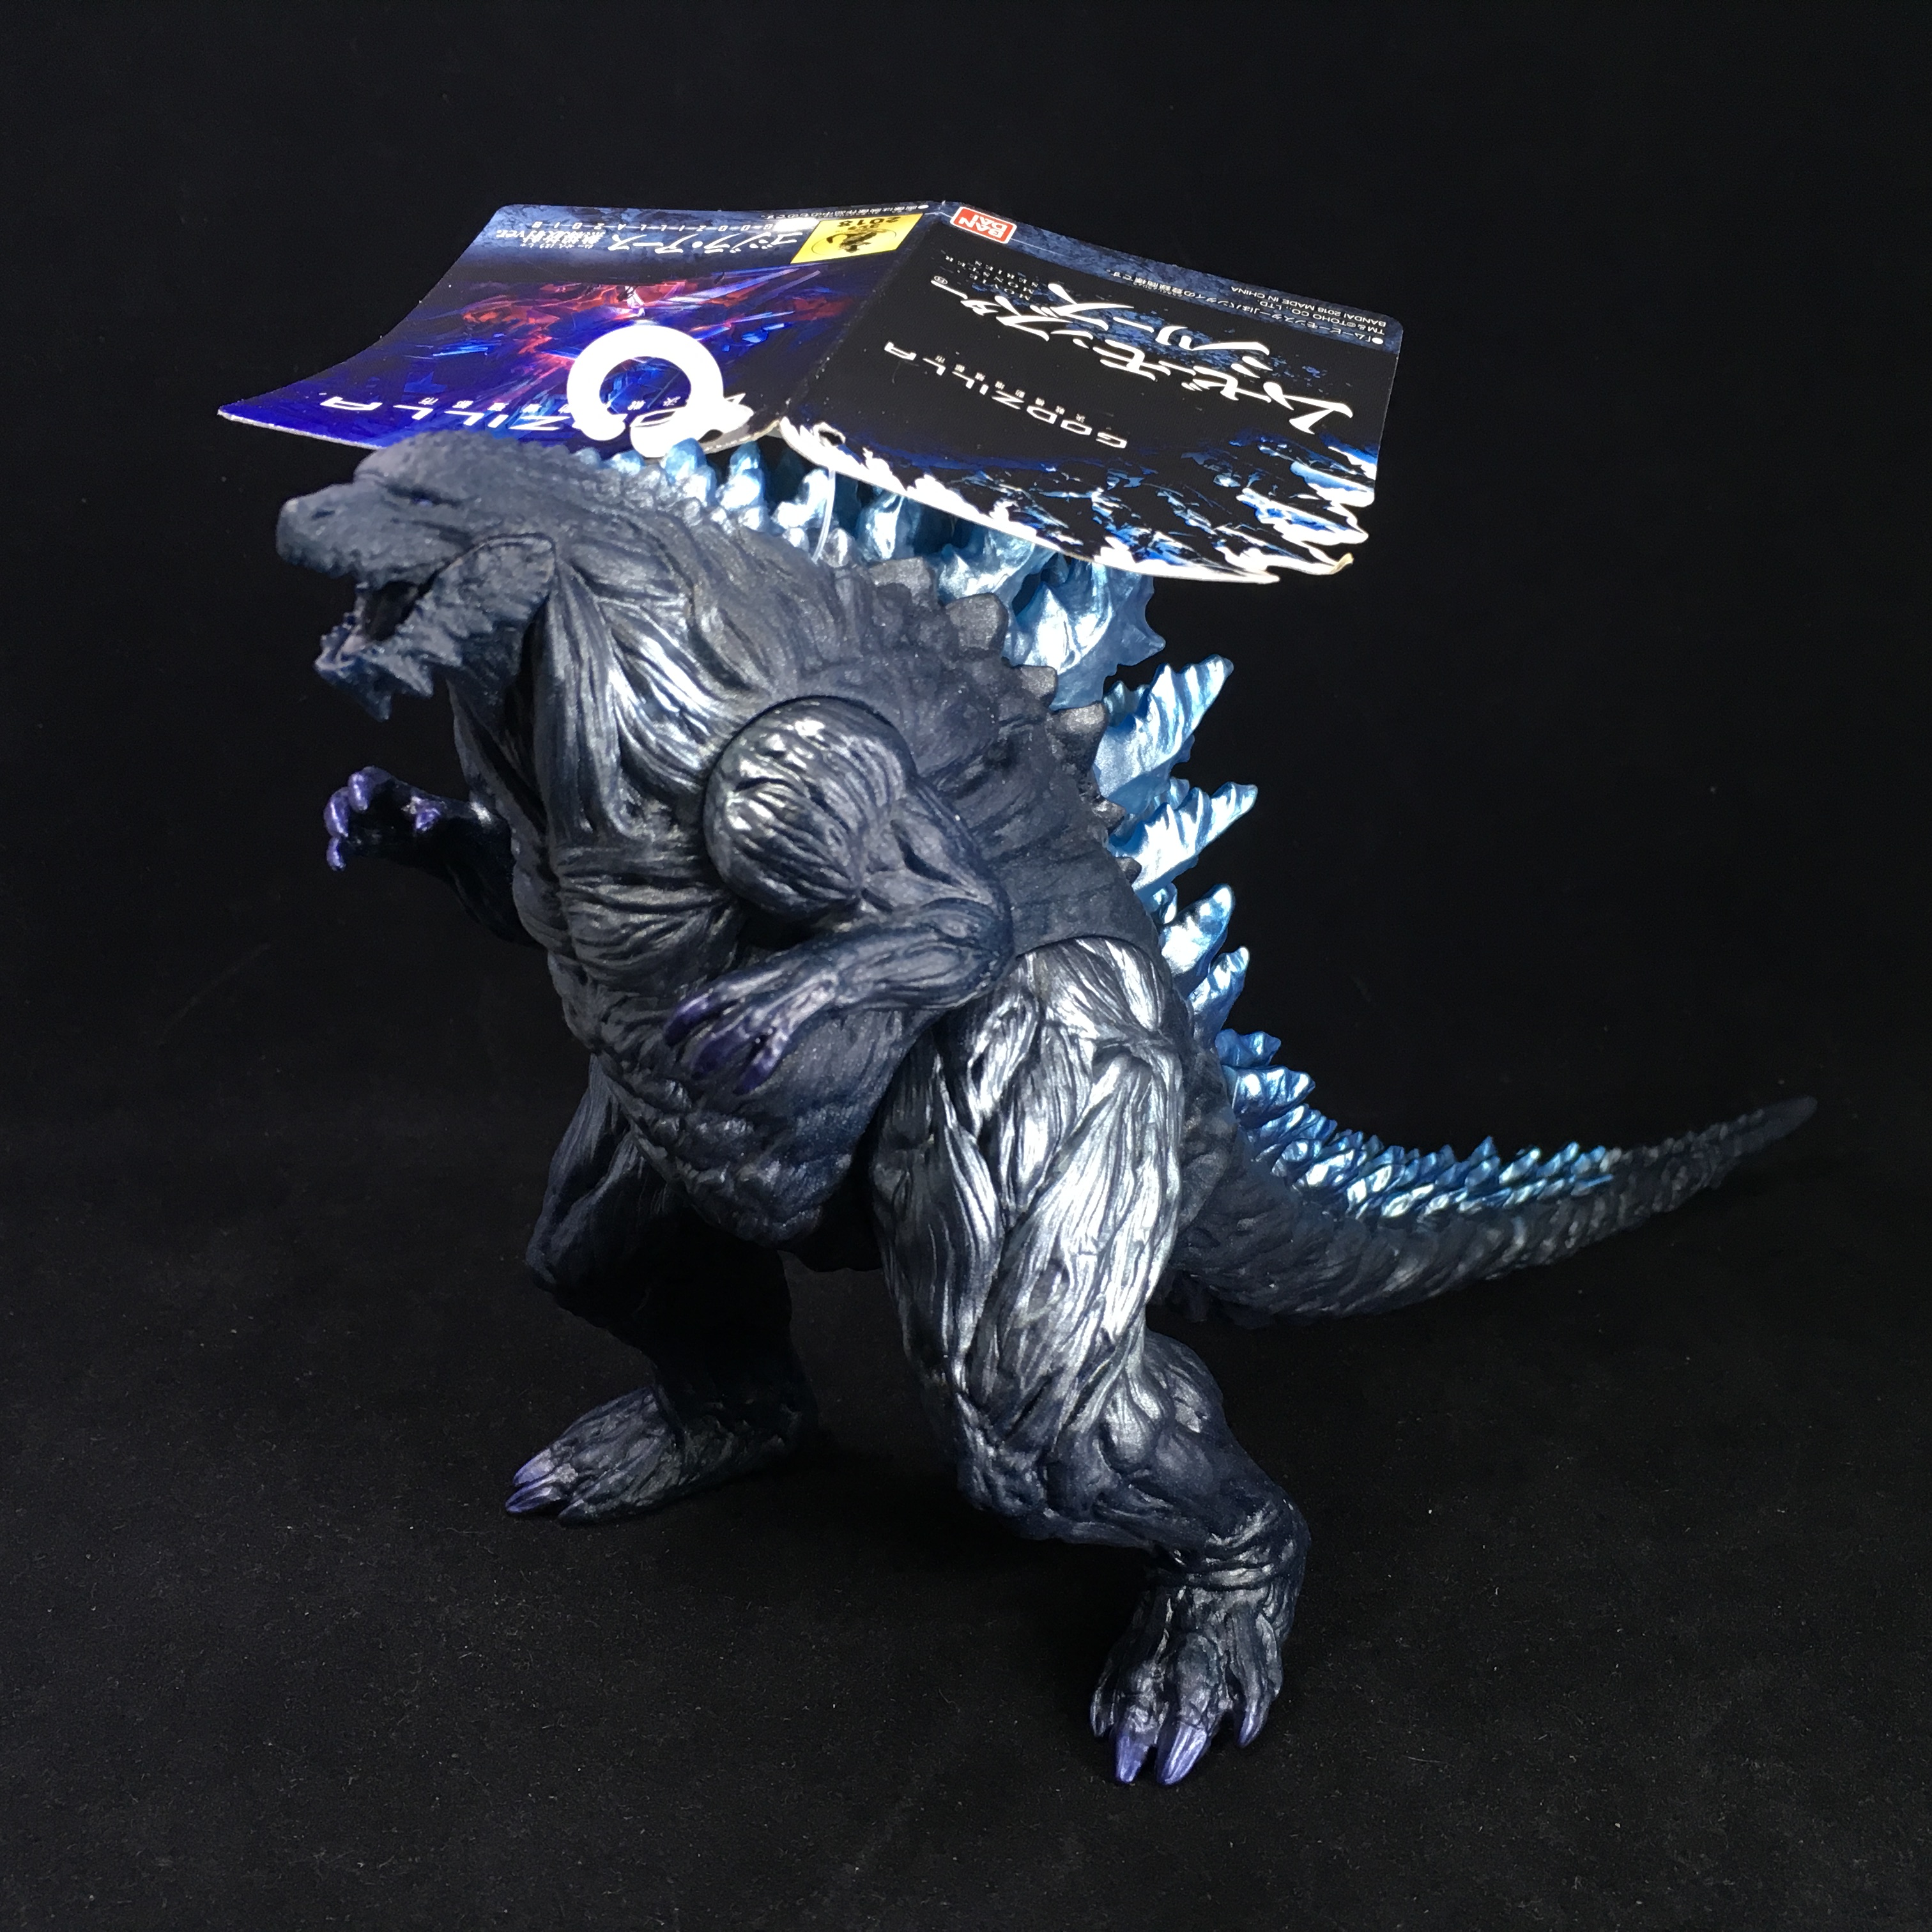 Godzilla Earth Movie Monster Series Heat Ray Radiation Version